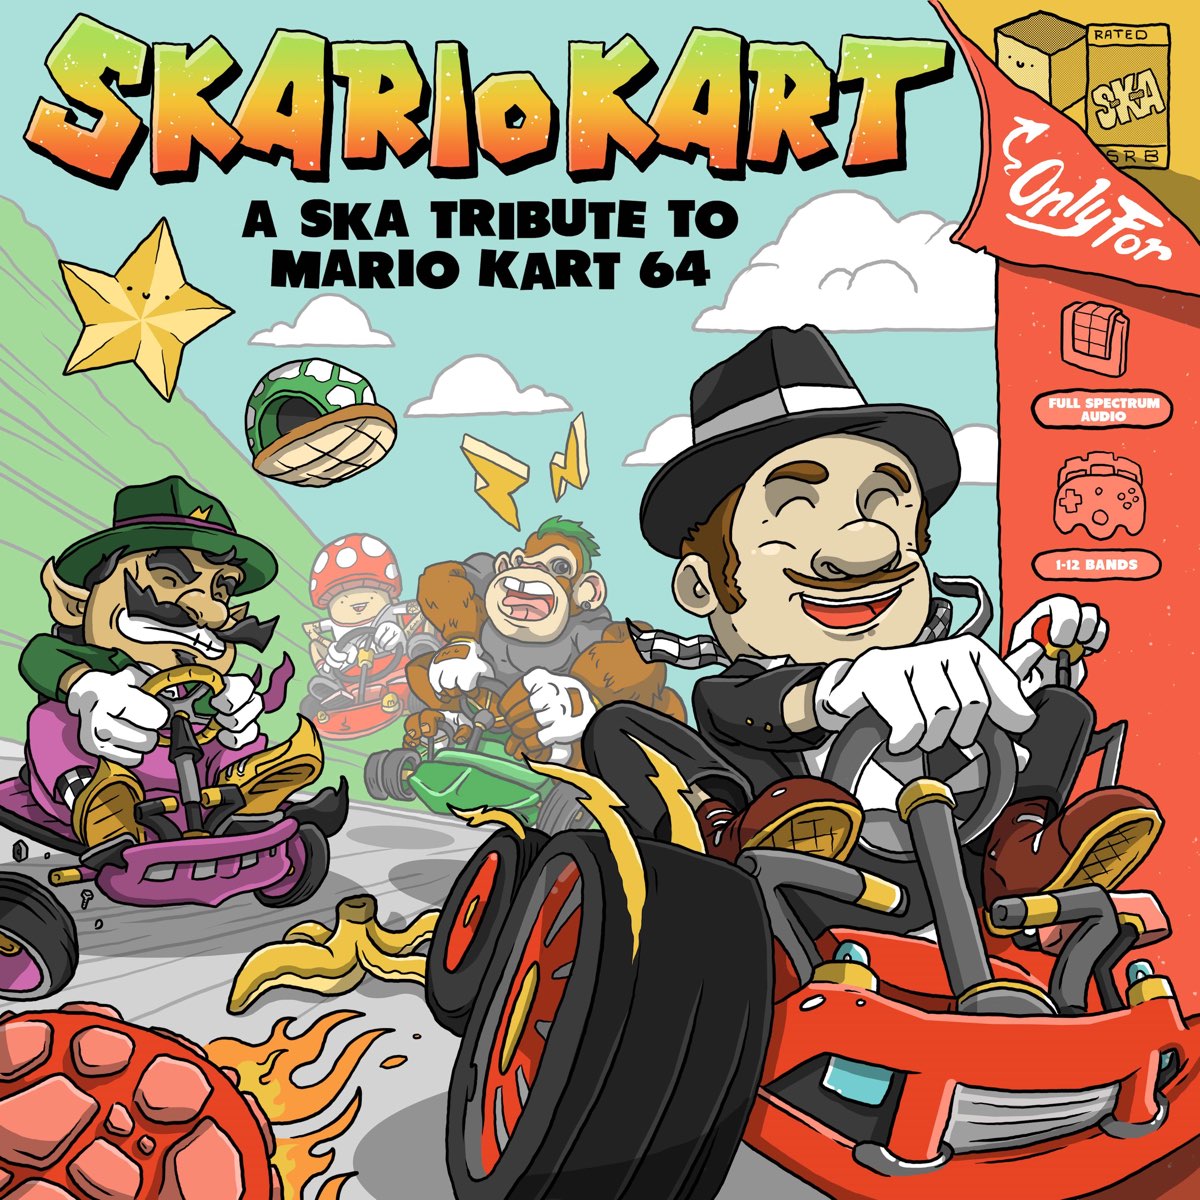 ‎skario Kart A Ska Tribute To Mario Kart 64 By Gamegrooves On Apple Music 